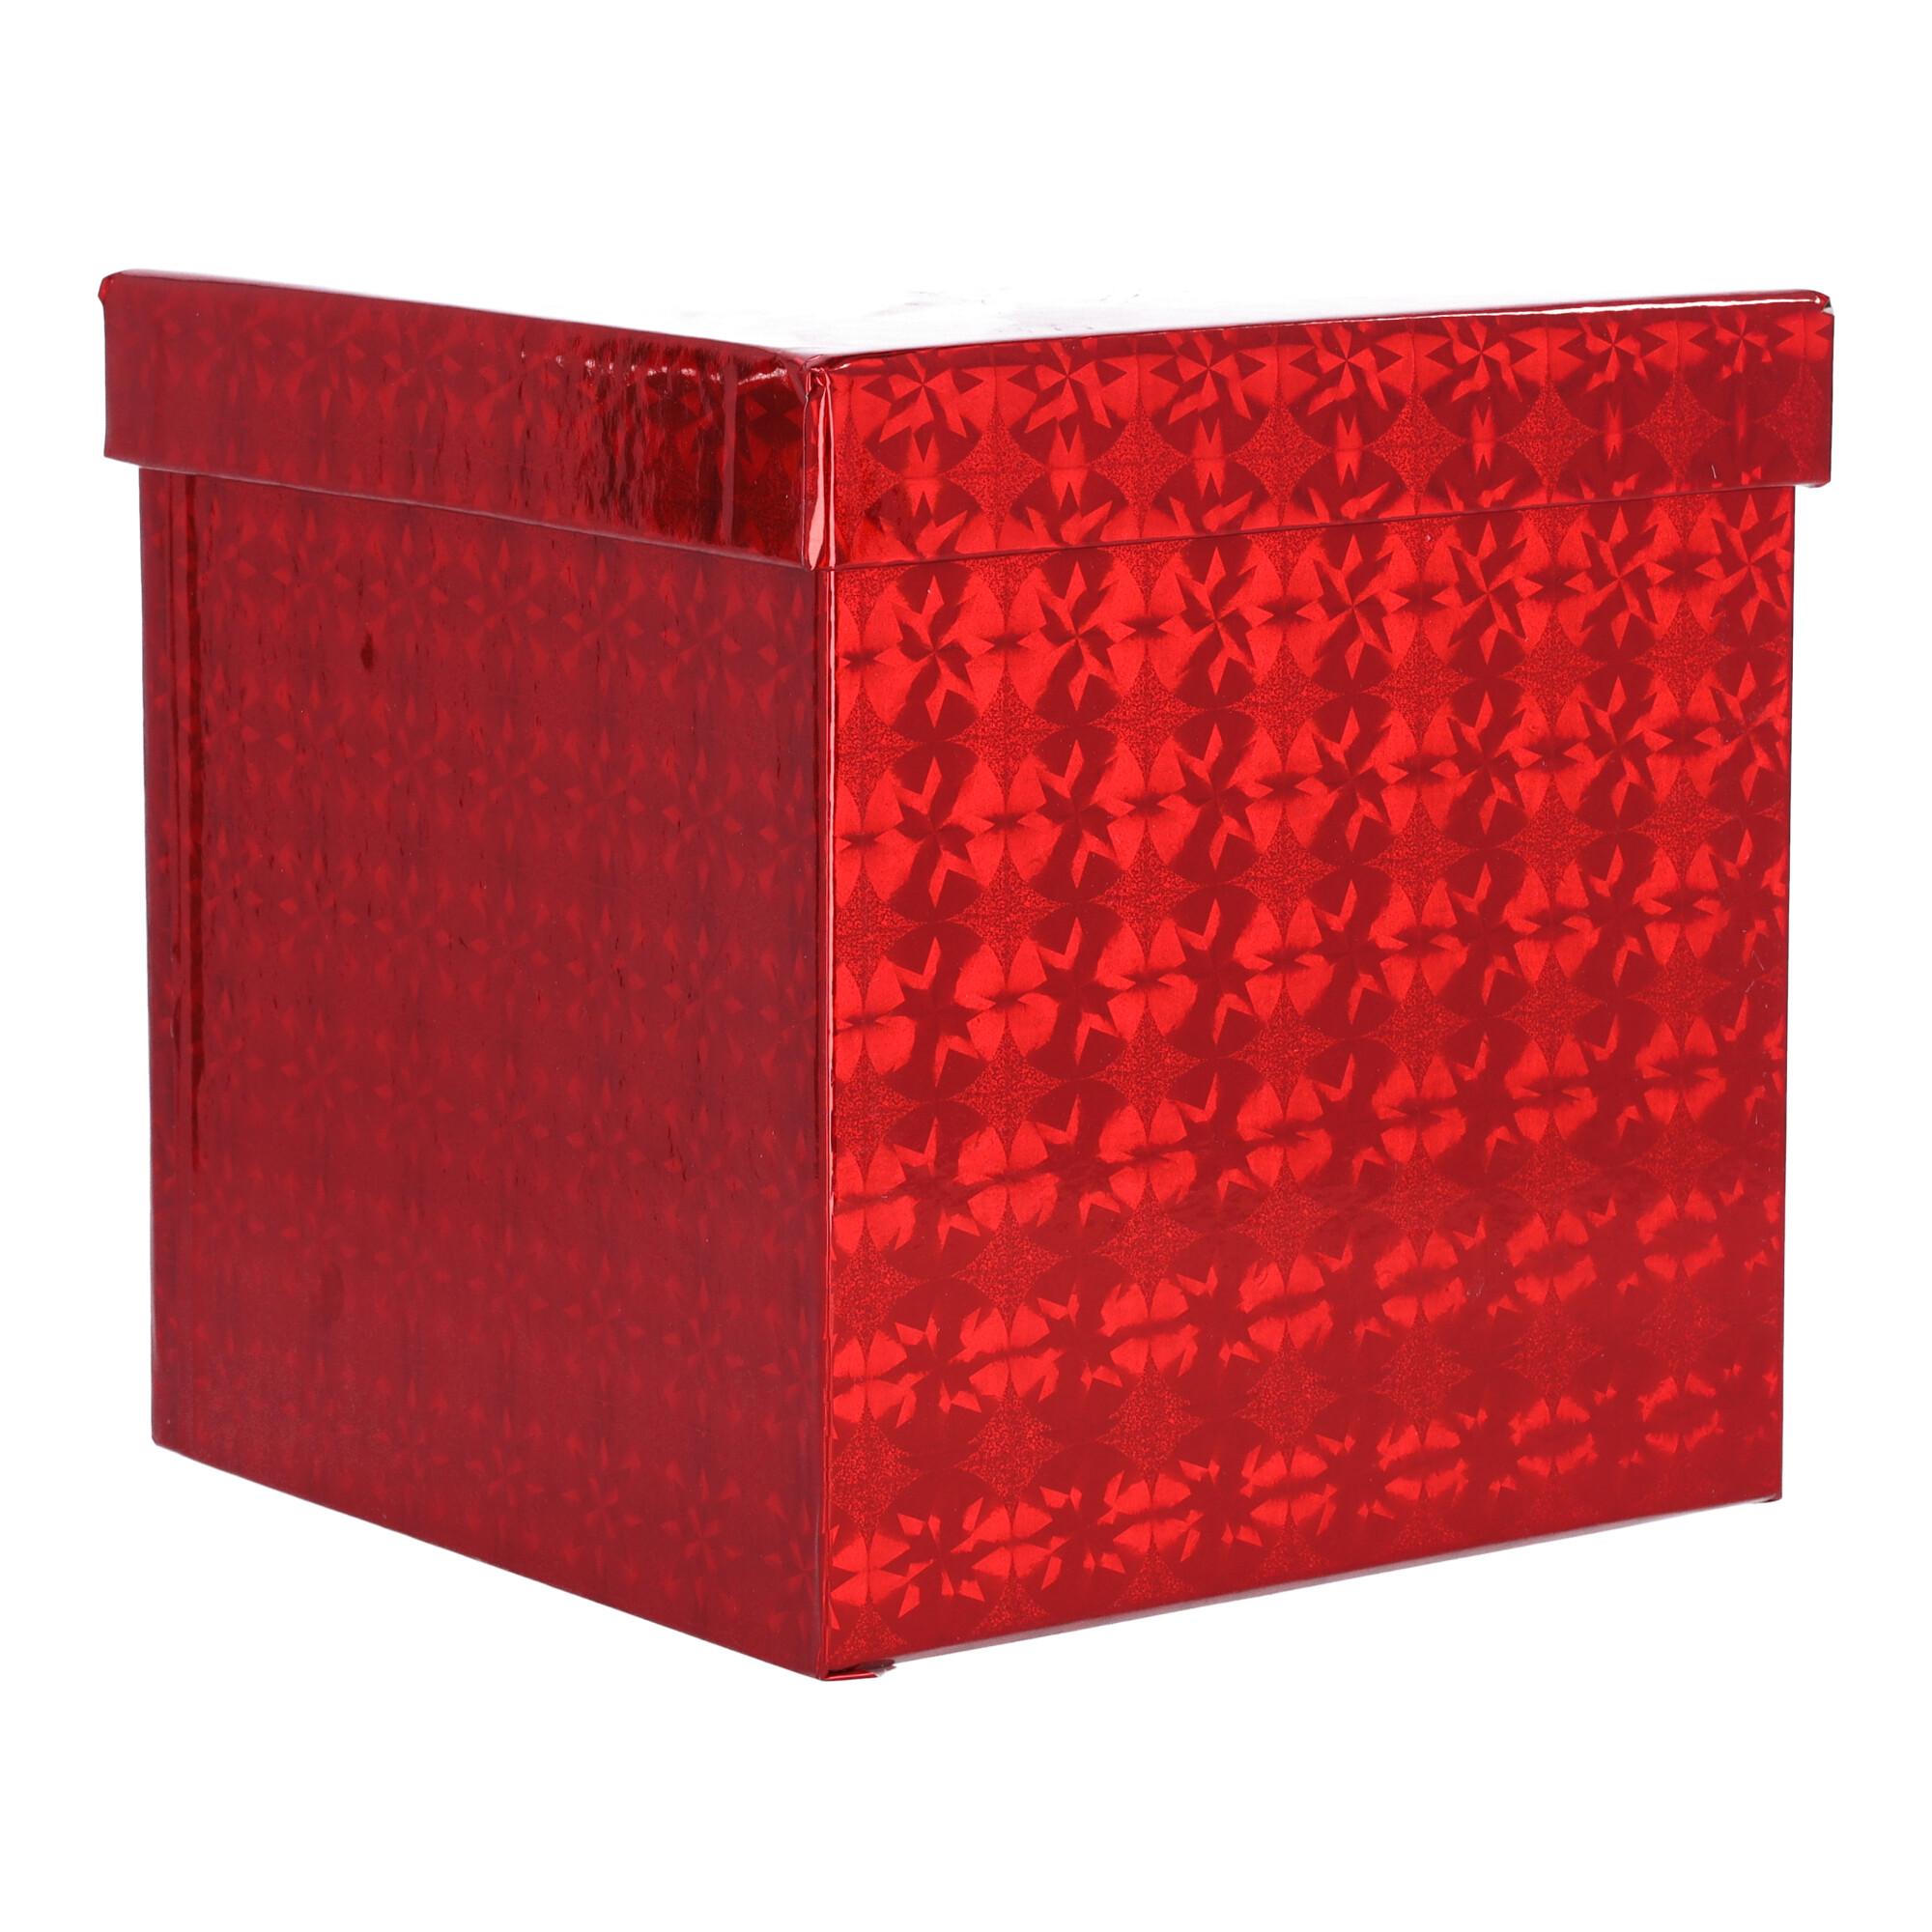 Present boxt square red 24,5x24,5 cm